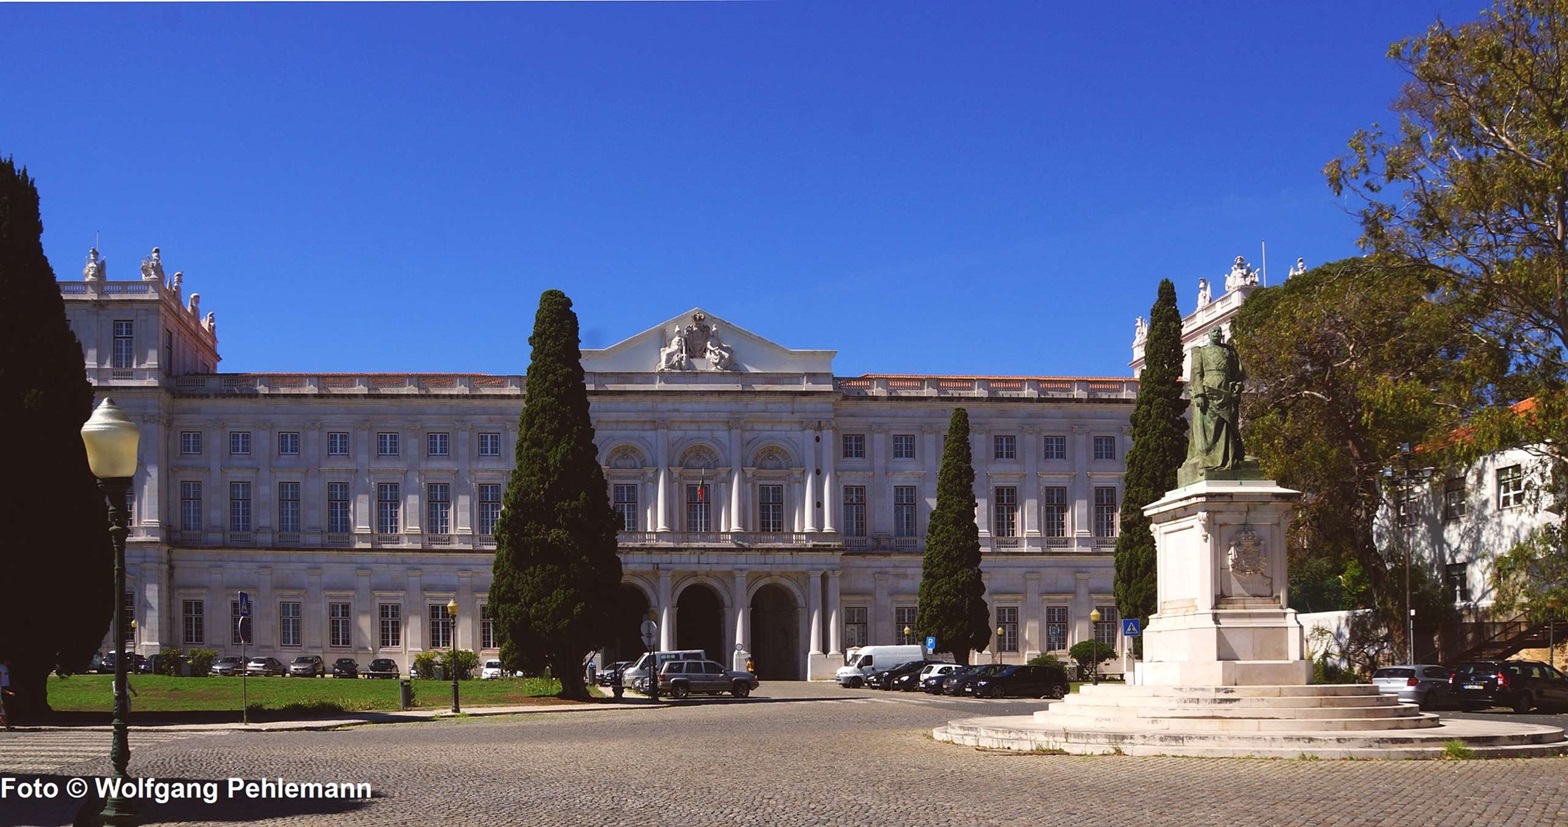 Der königliche Palast Palácio Nacional da Ajuda 1861 Lissabon Portugal - Foto © Wolfgang Pehlemann DSC02265